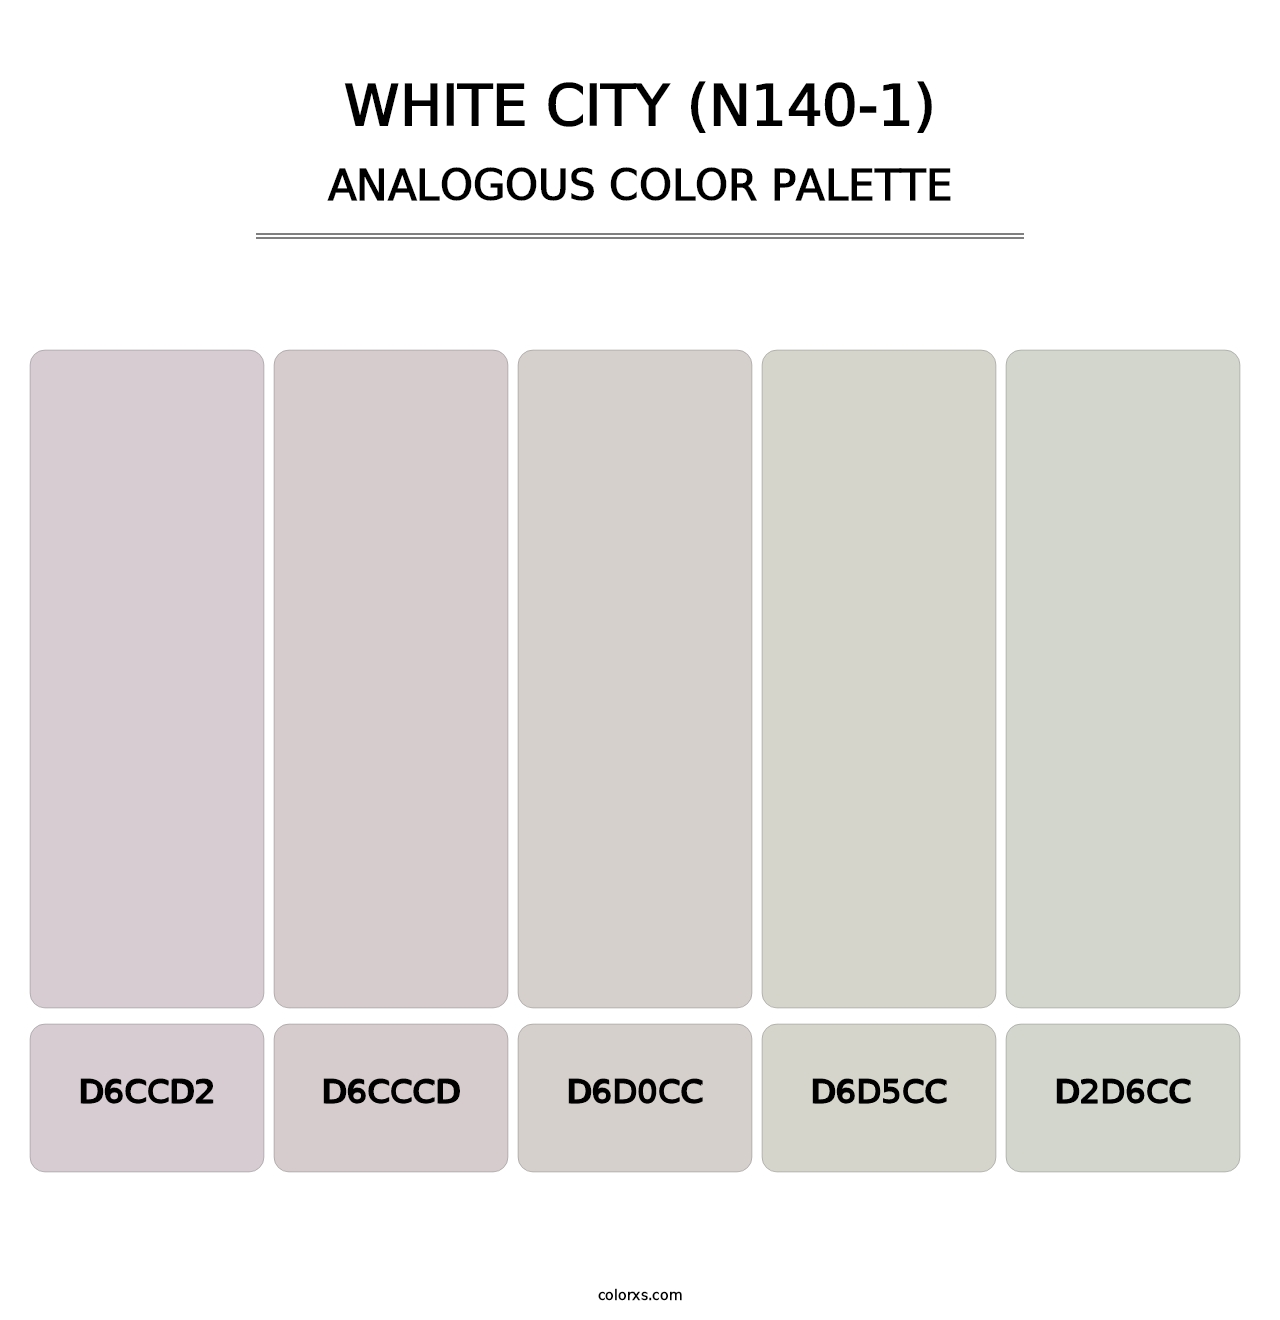 White City (N140-1) - Analogous Color Palette